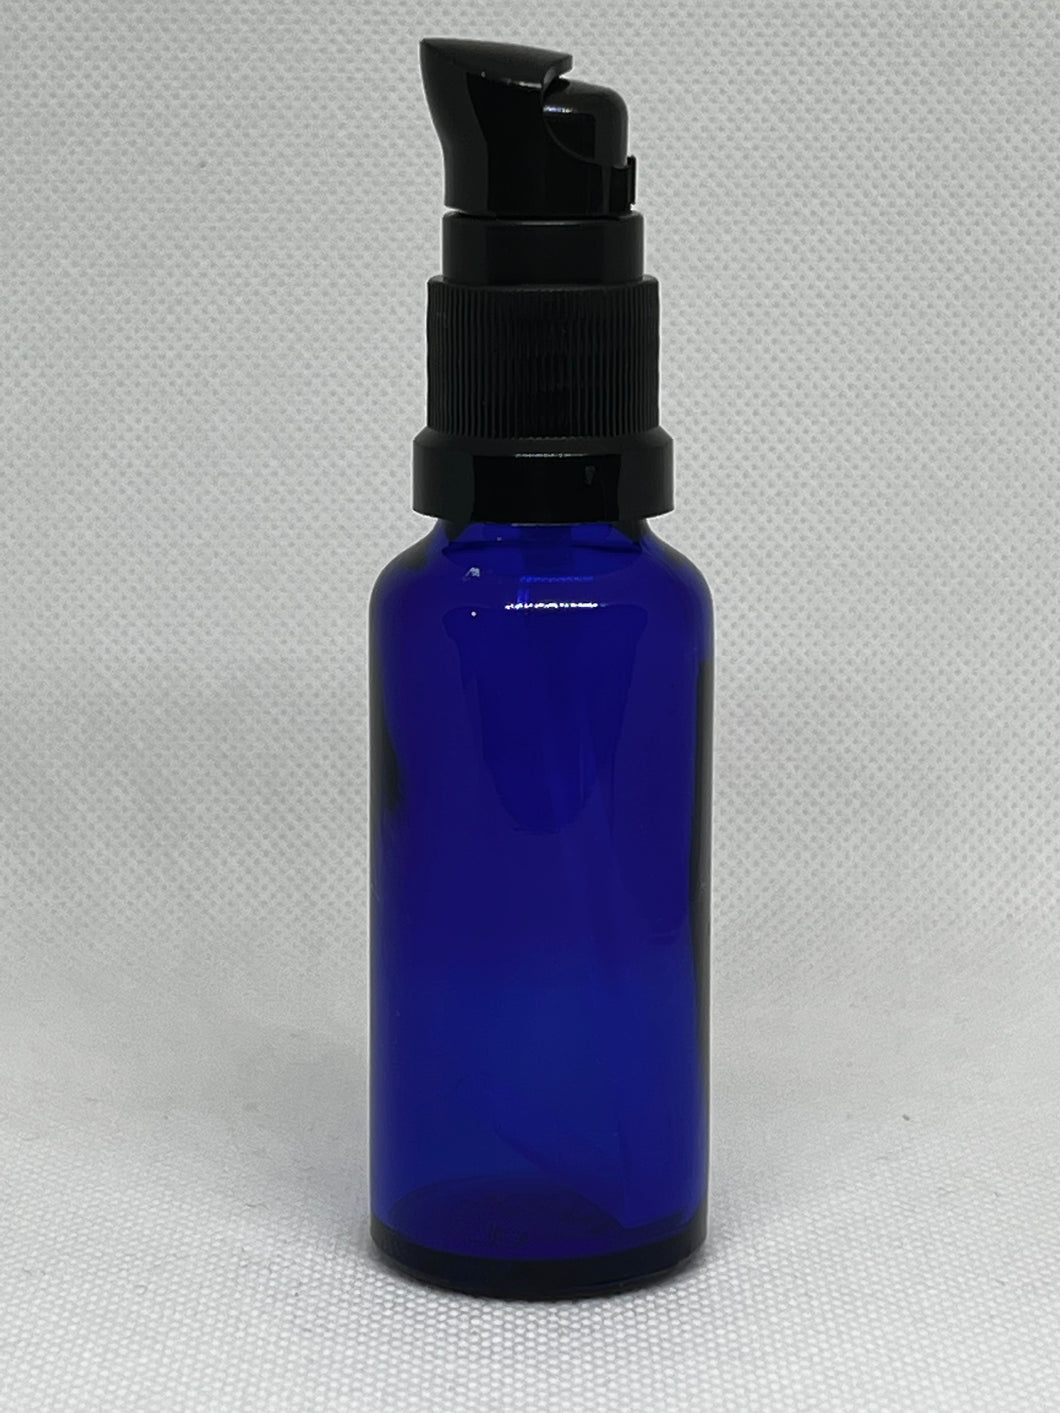 30ml Blue Bottle with facial pump